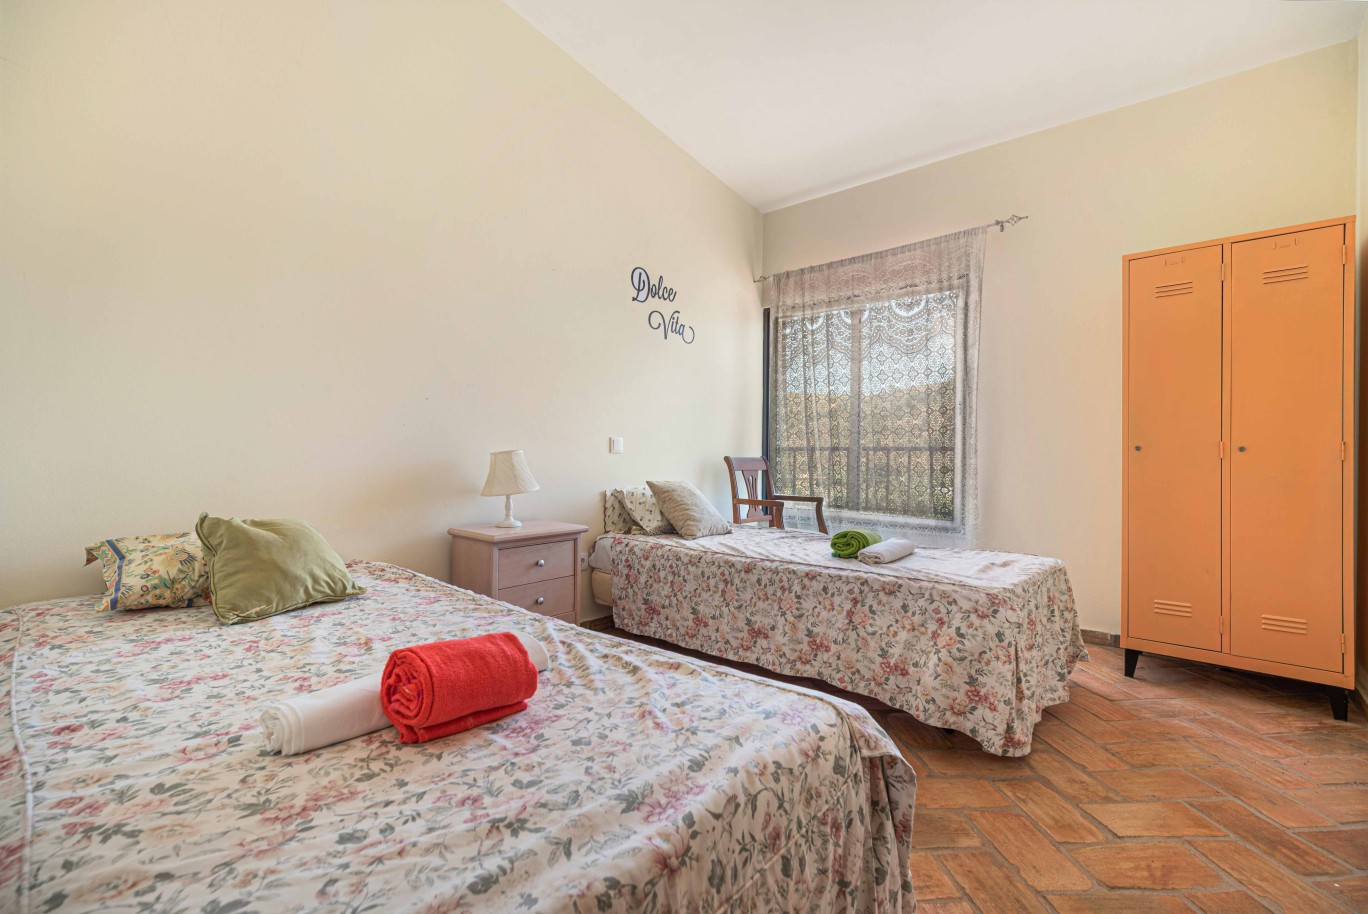 9 Bedroom Country Villa à vendre à Pereira, Algarve_231602